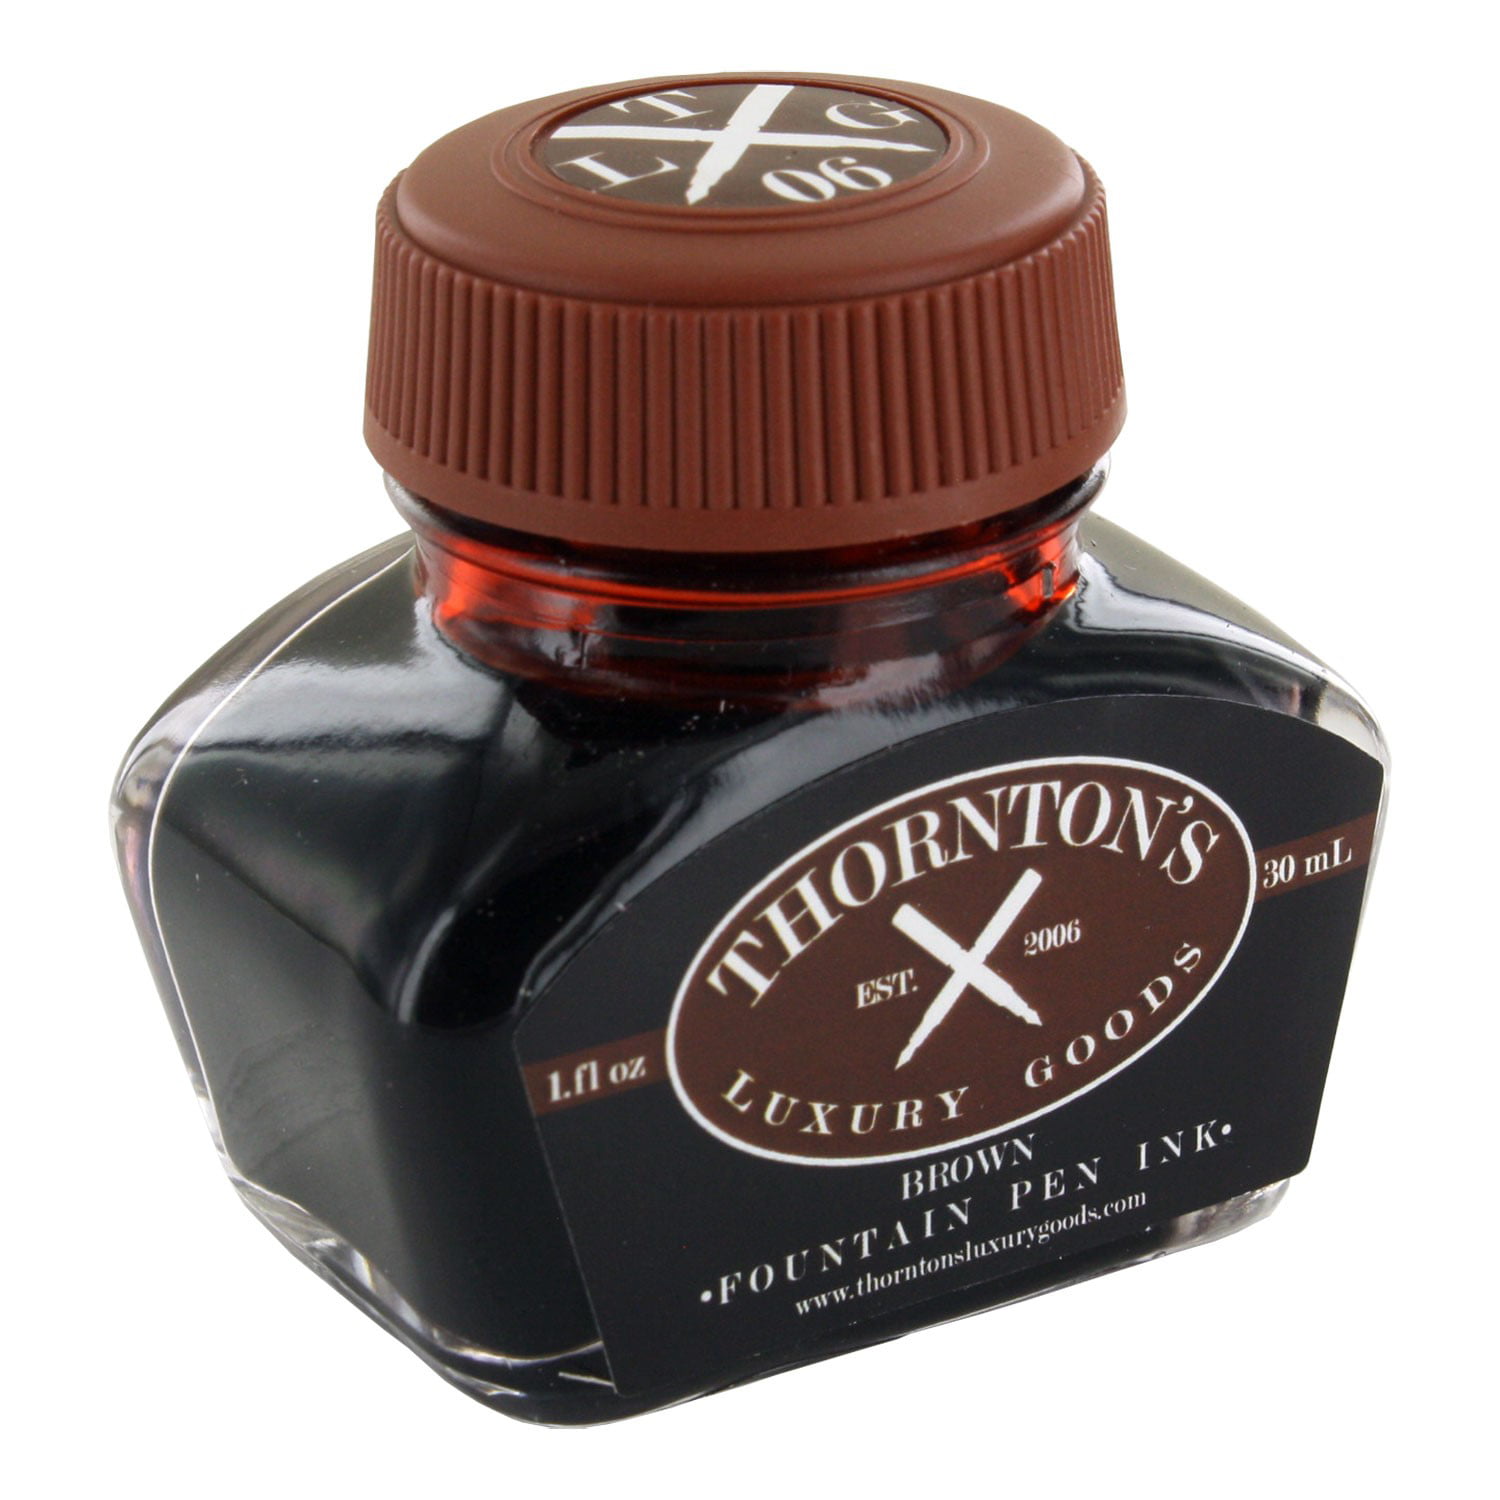 Thornton's Luxury Goods Short Standard International Fountain Pen Ink for sale online 